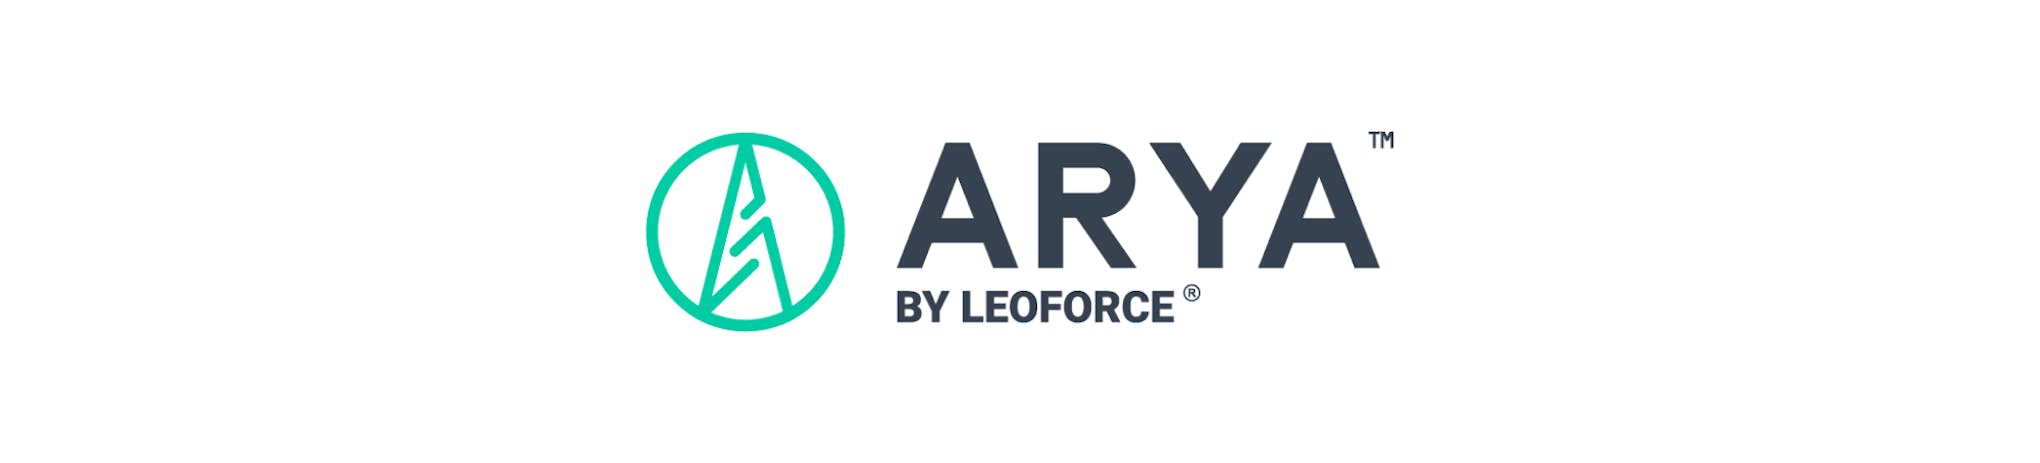 Arya - AI recruiting platform.